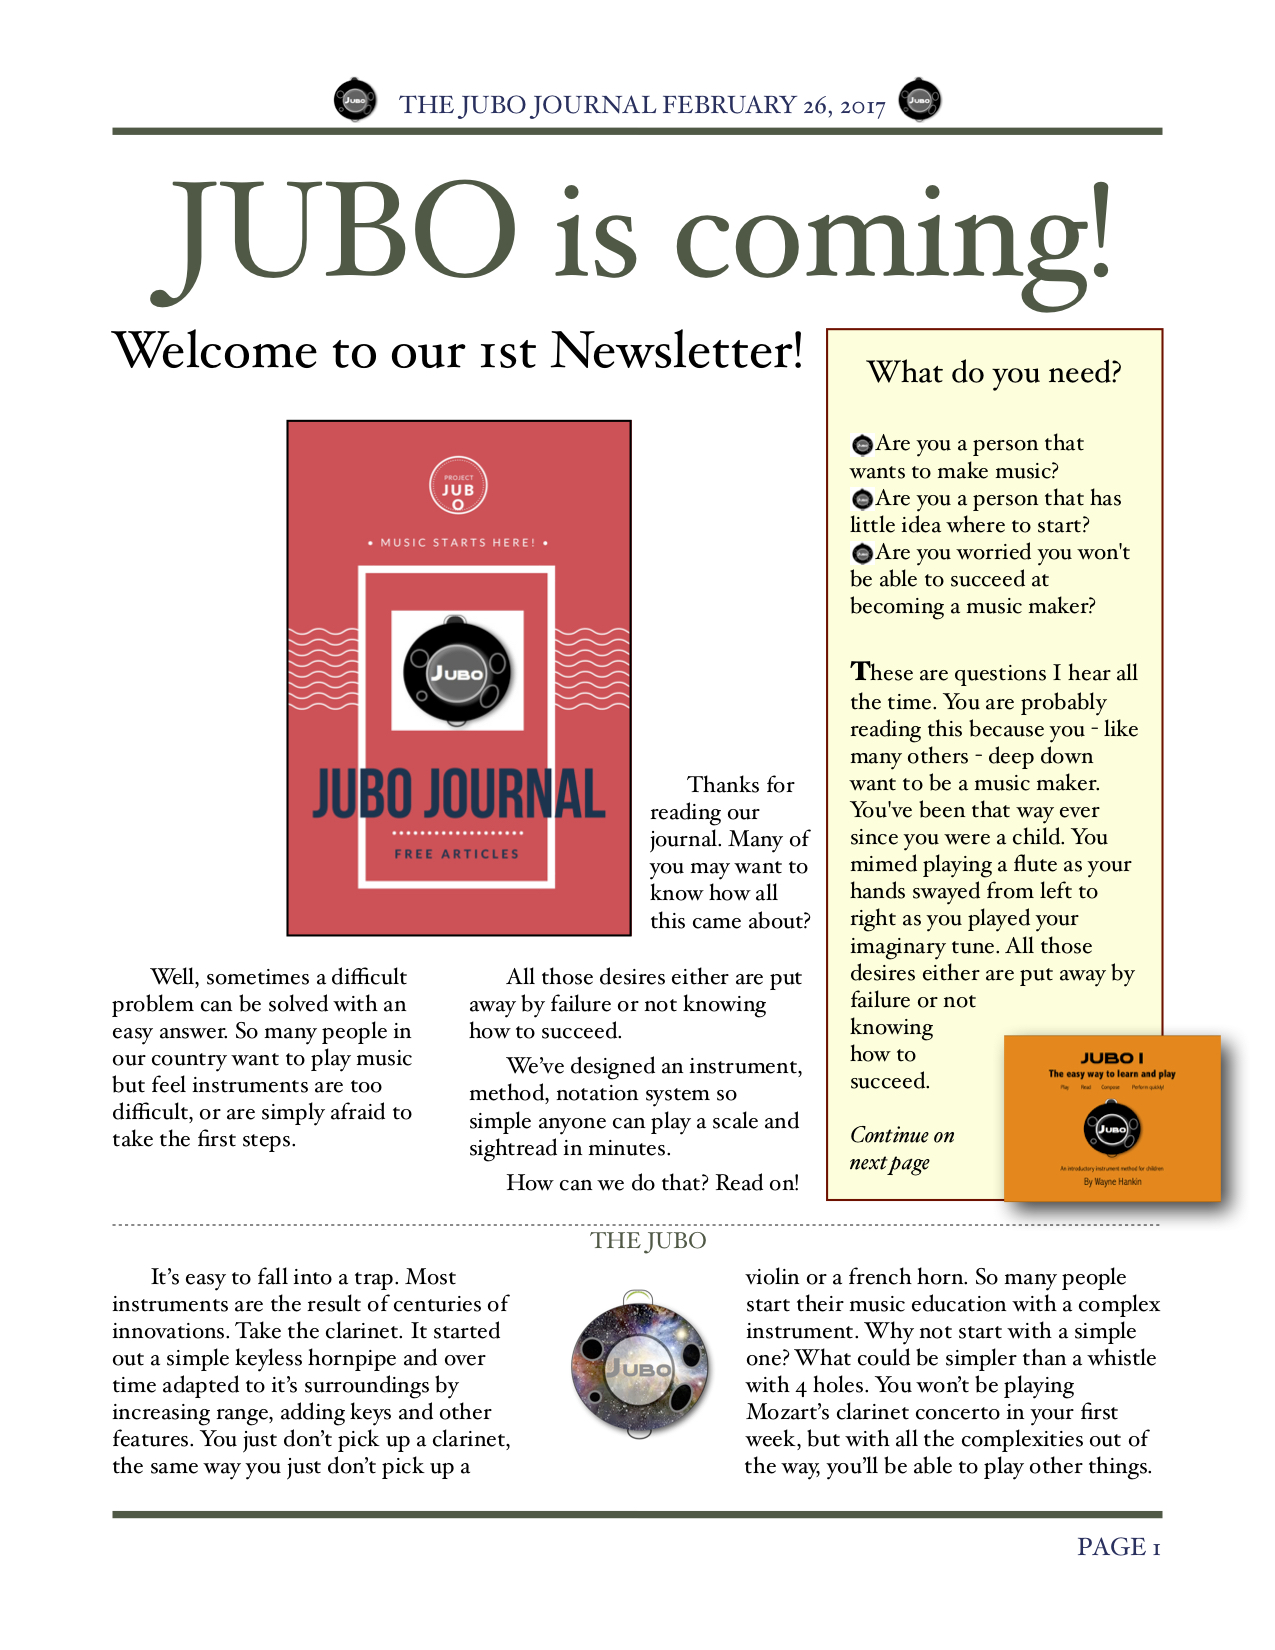 NEWS! The JUBO Journal